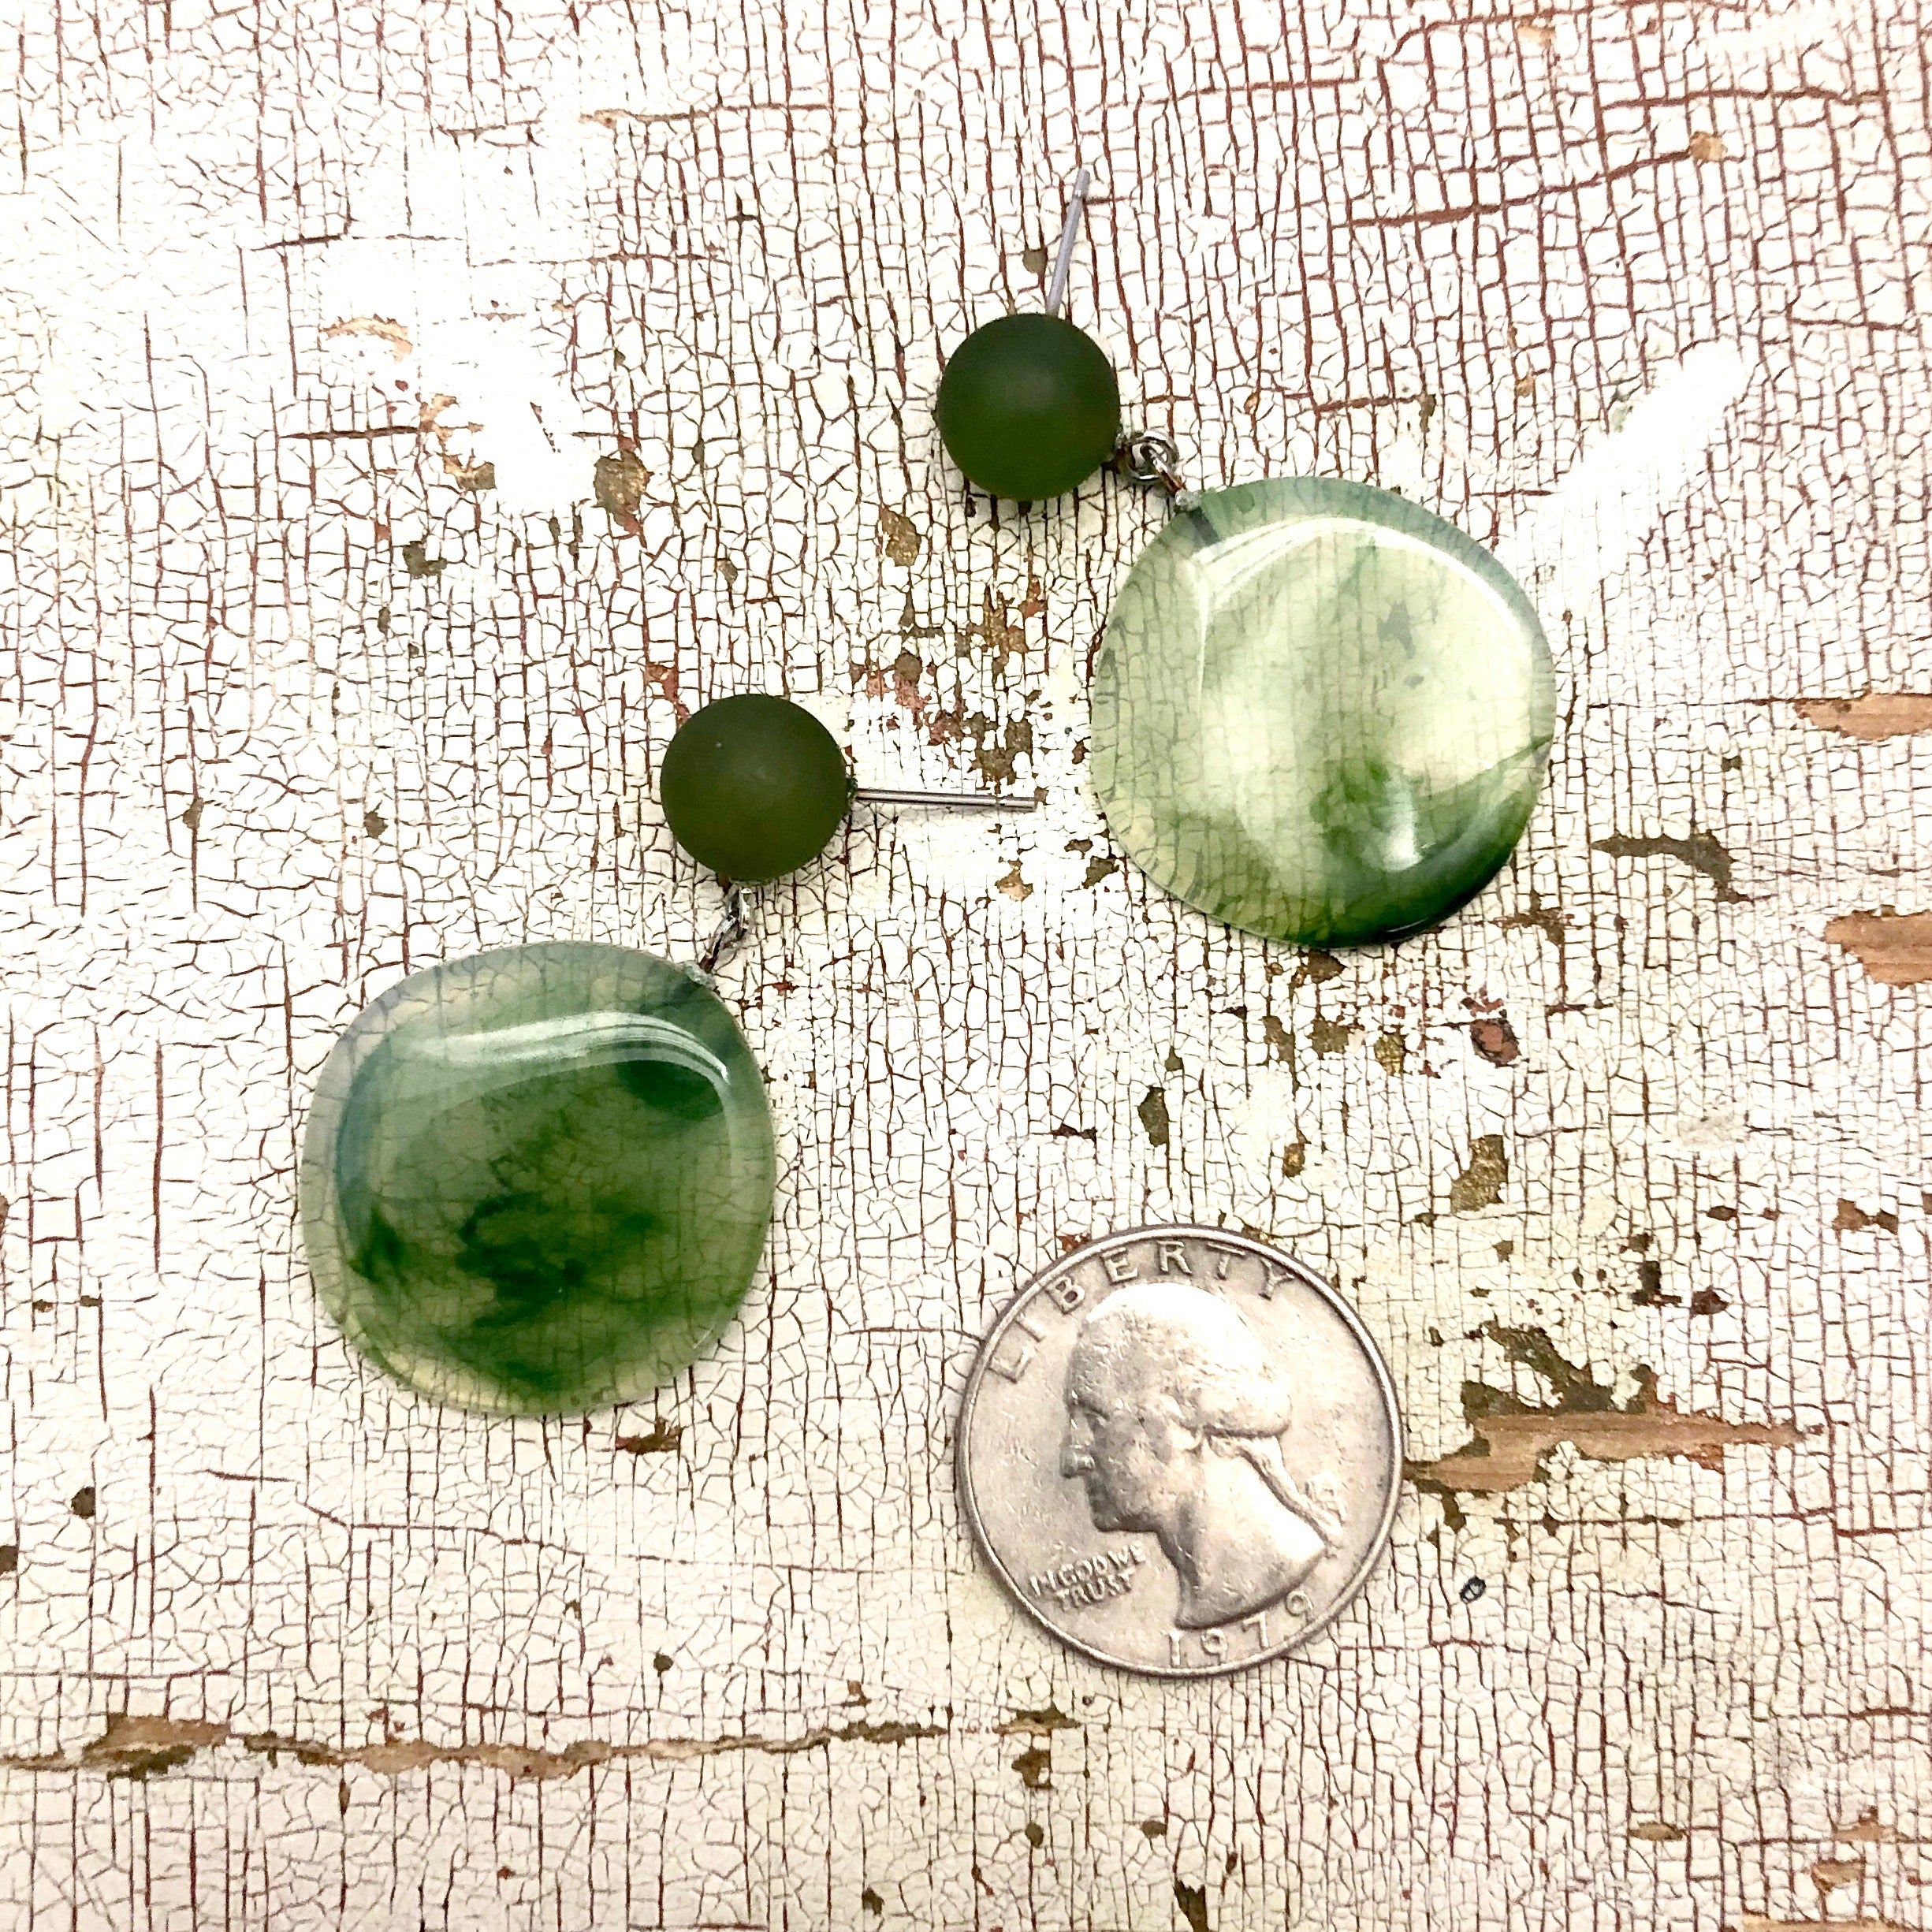 sage green earrings